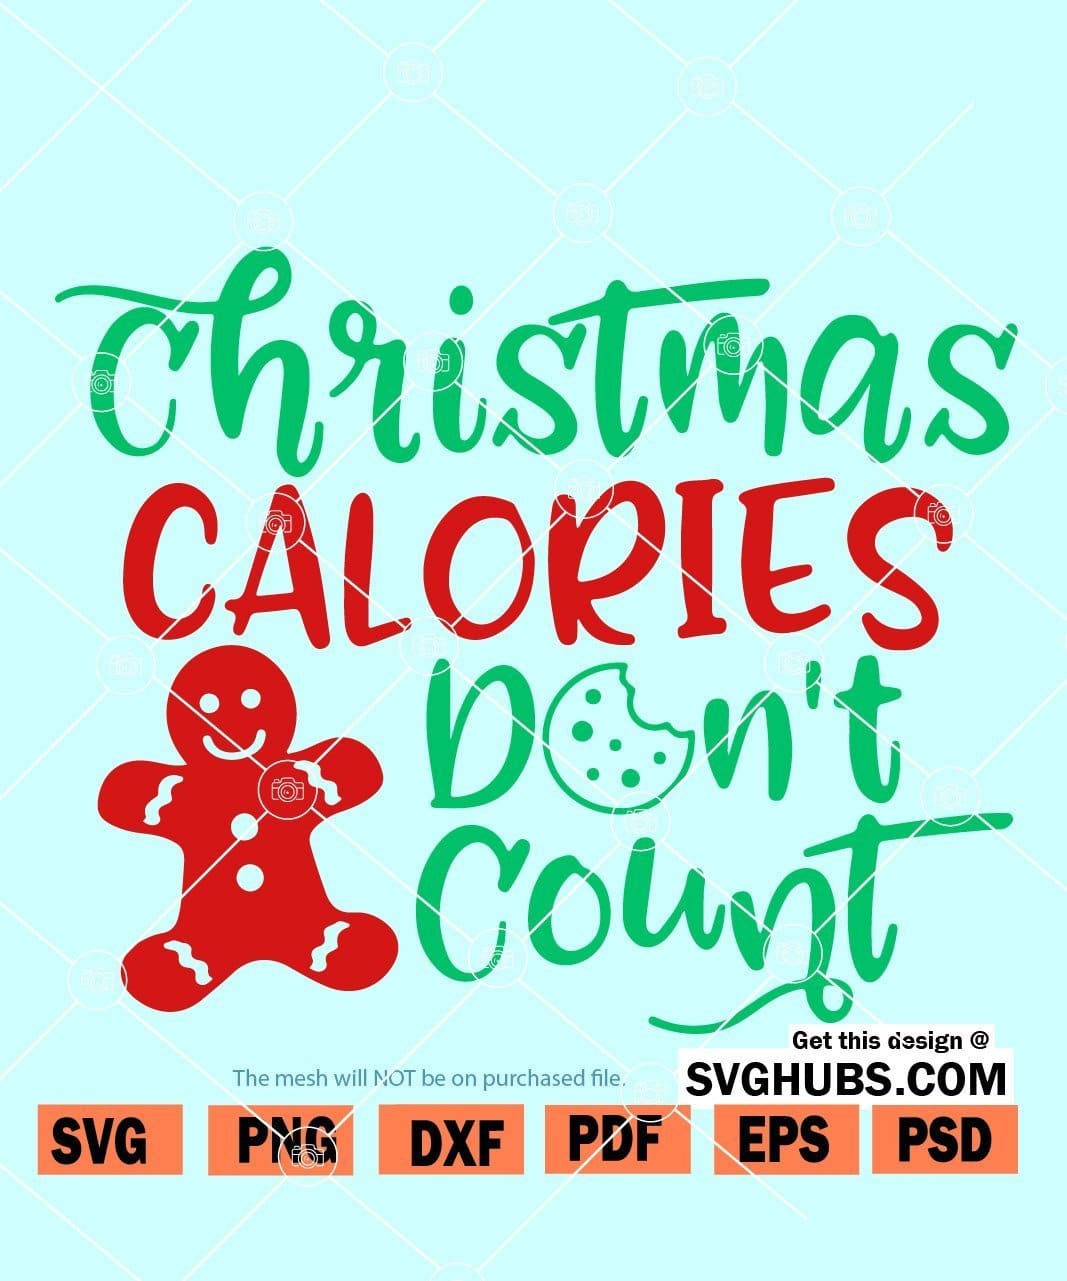 Christmas calories don't count svg. 